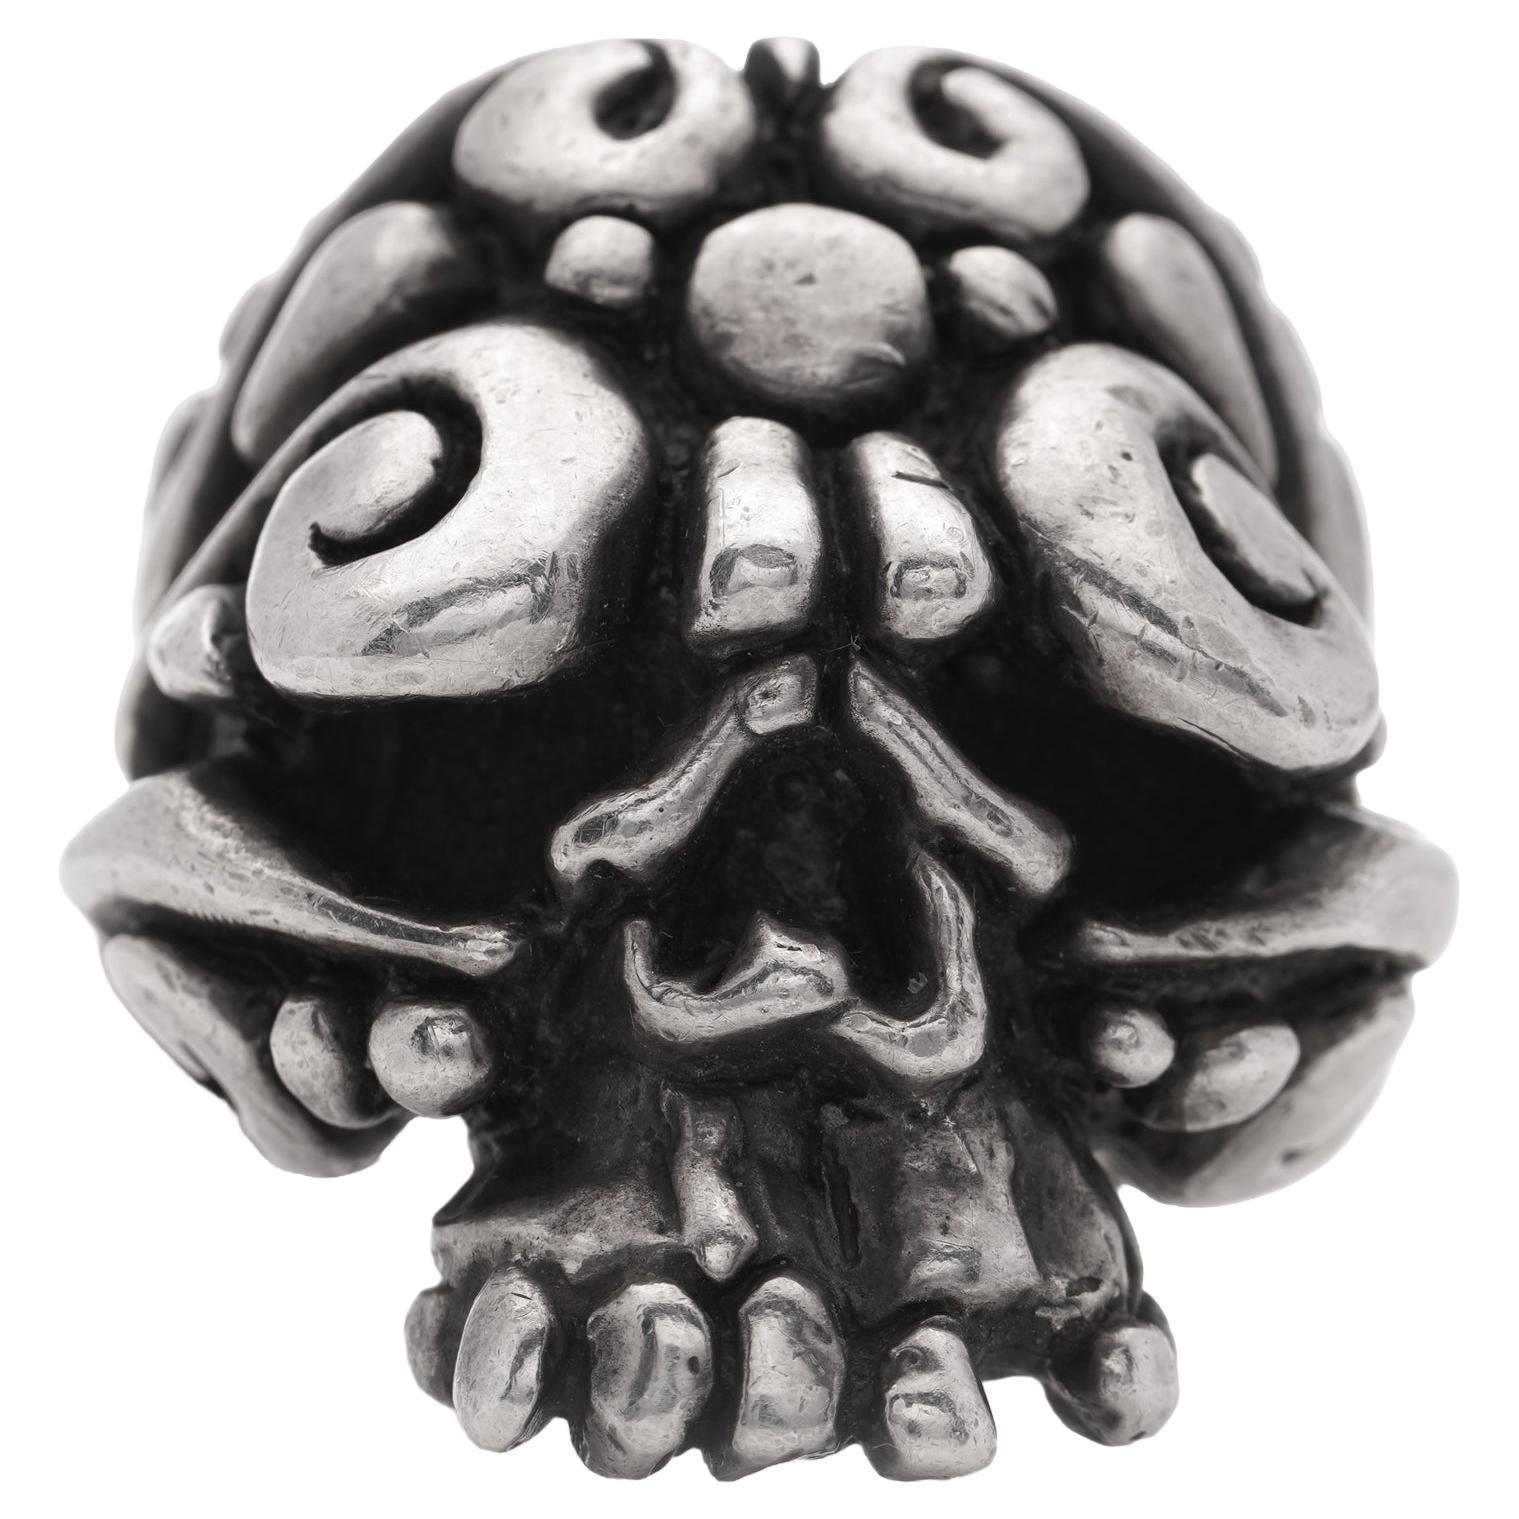 The Crazy Pig Designs sterling silver ' El Muertos ' collection skull ring. 